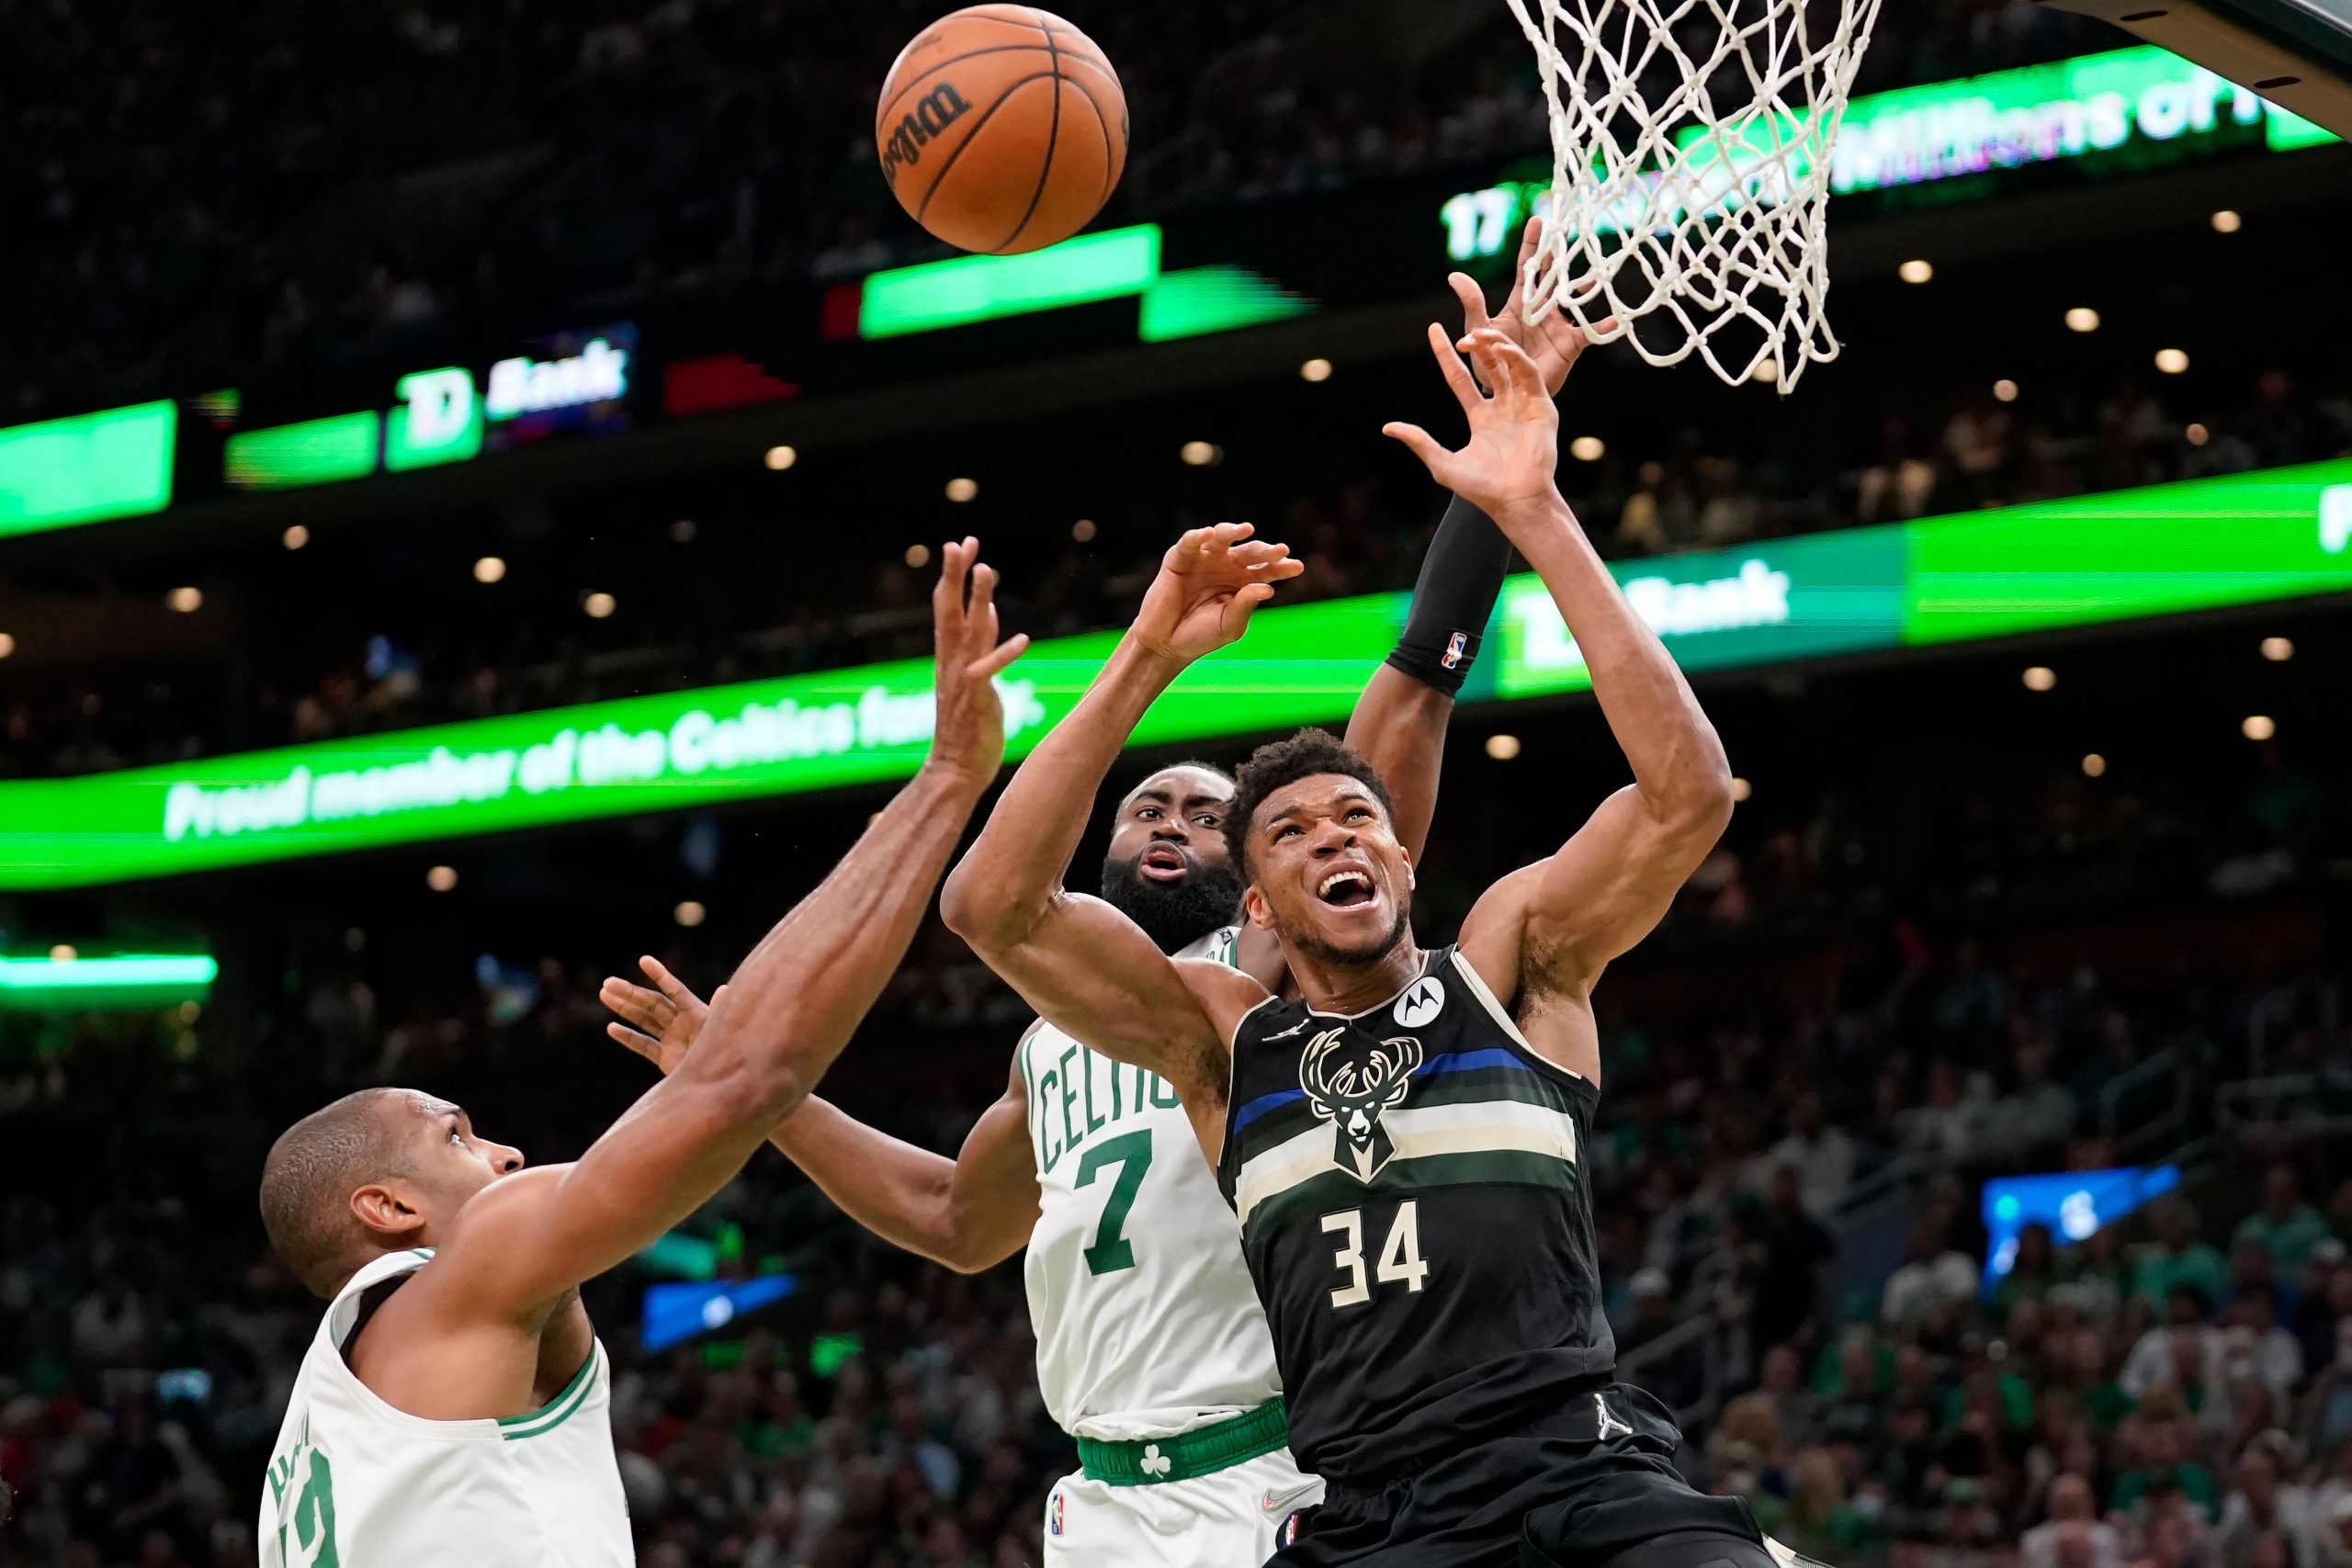 Tiring Giannis, Bucks fall short in NBA title repeat bid over Celtics, 109-81